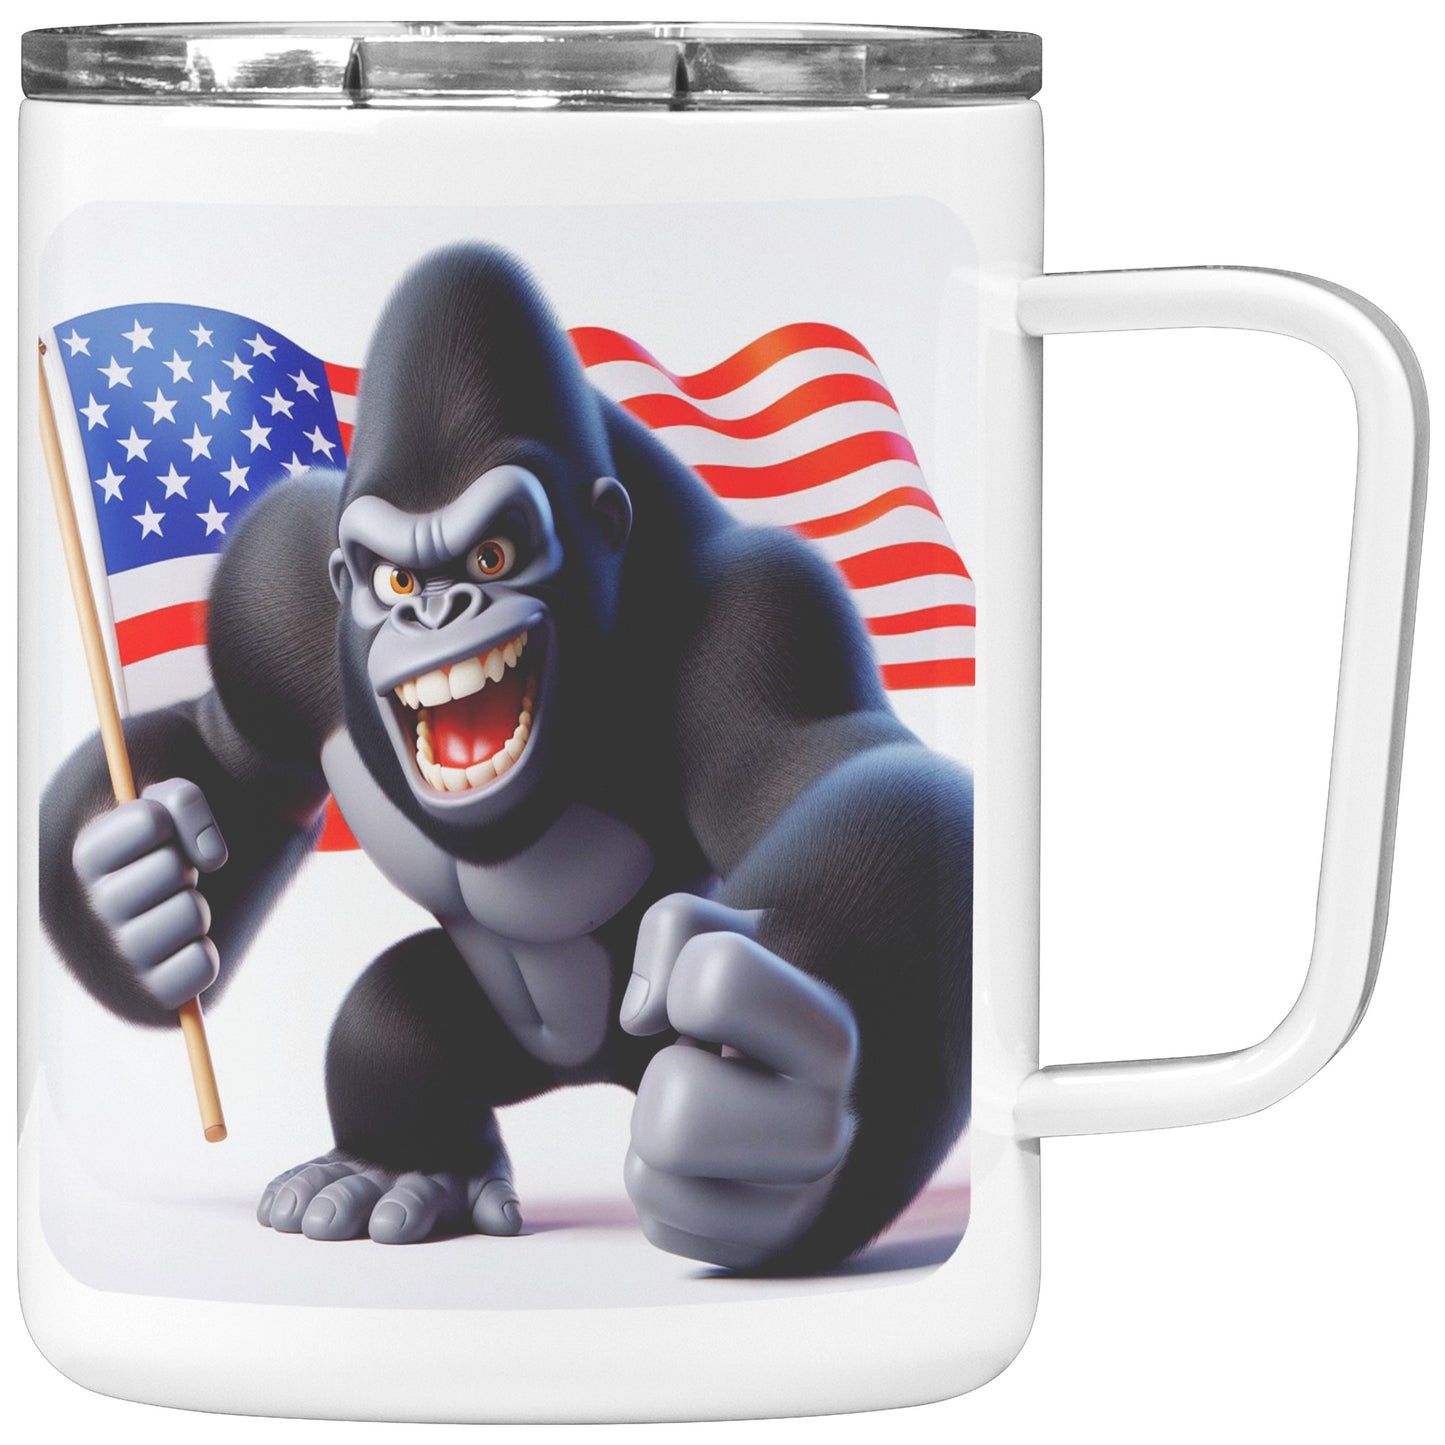 Grumpy Gorilla - Insulated Coffee Mug #1